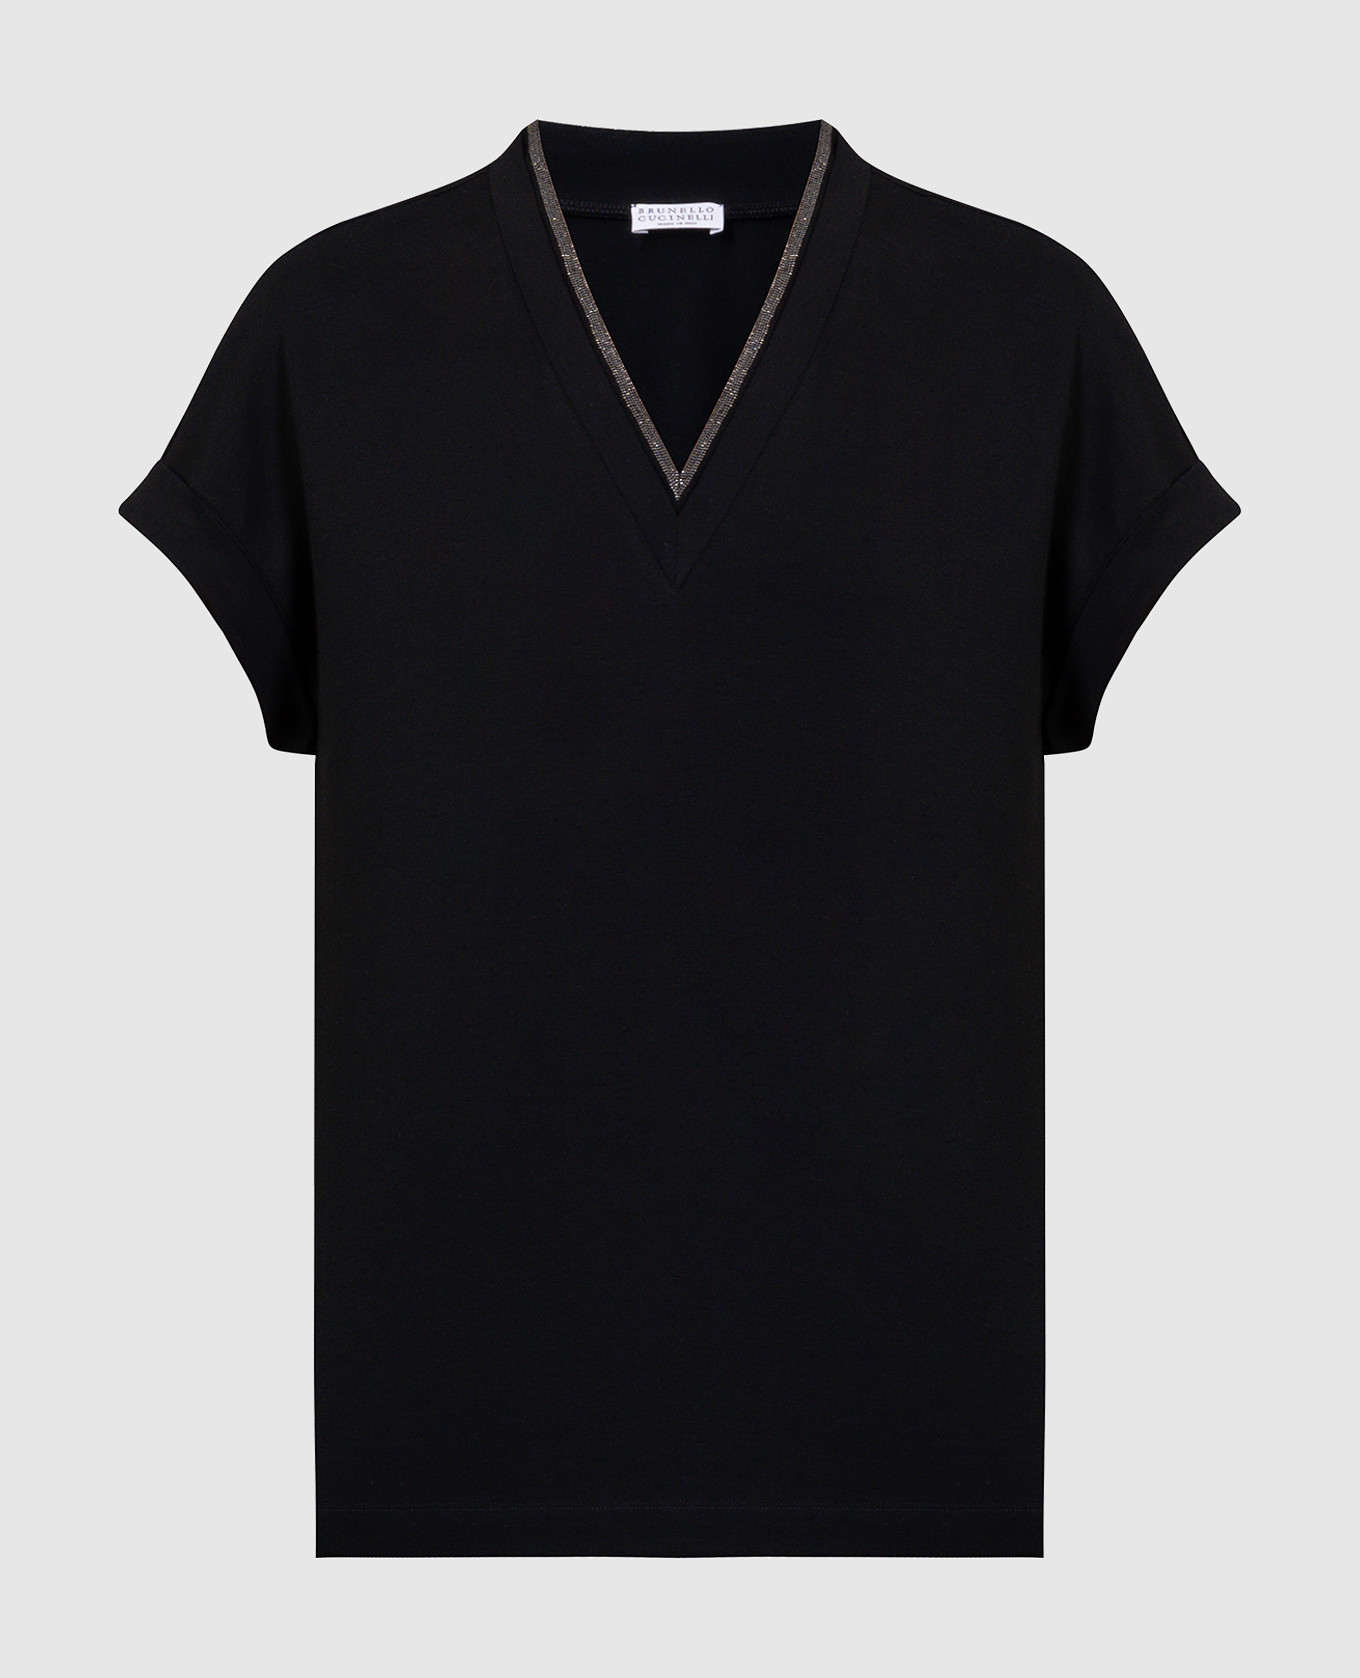 Black t-shirt with monil chain made of ecolathuni